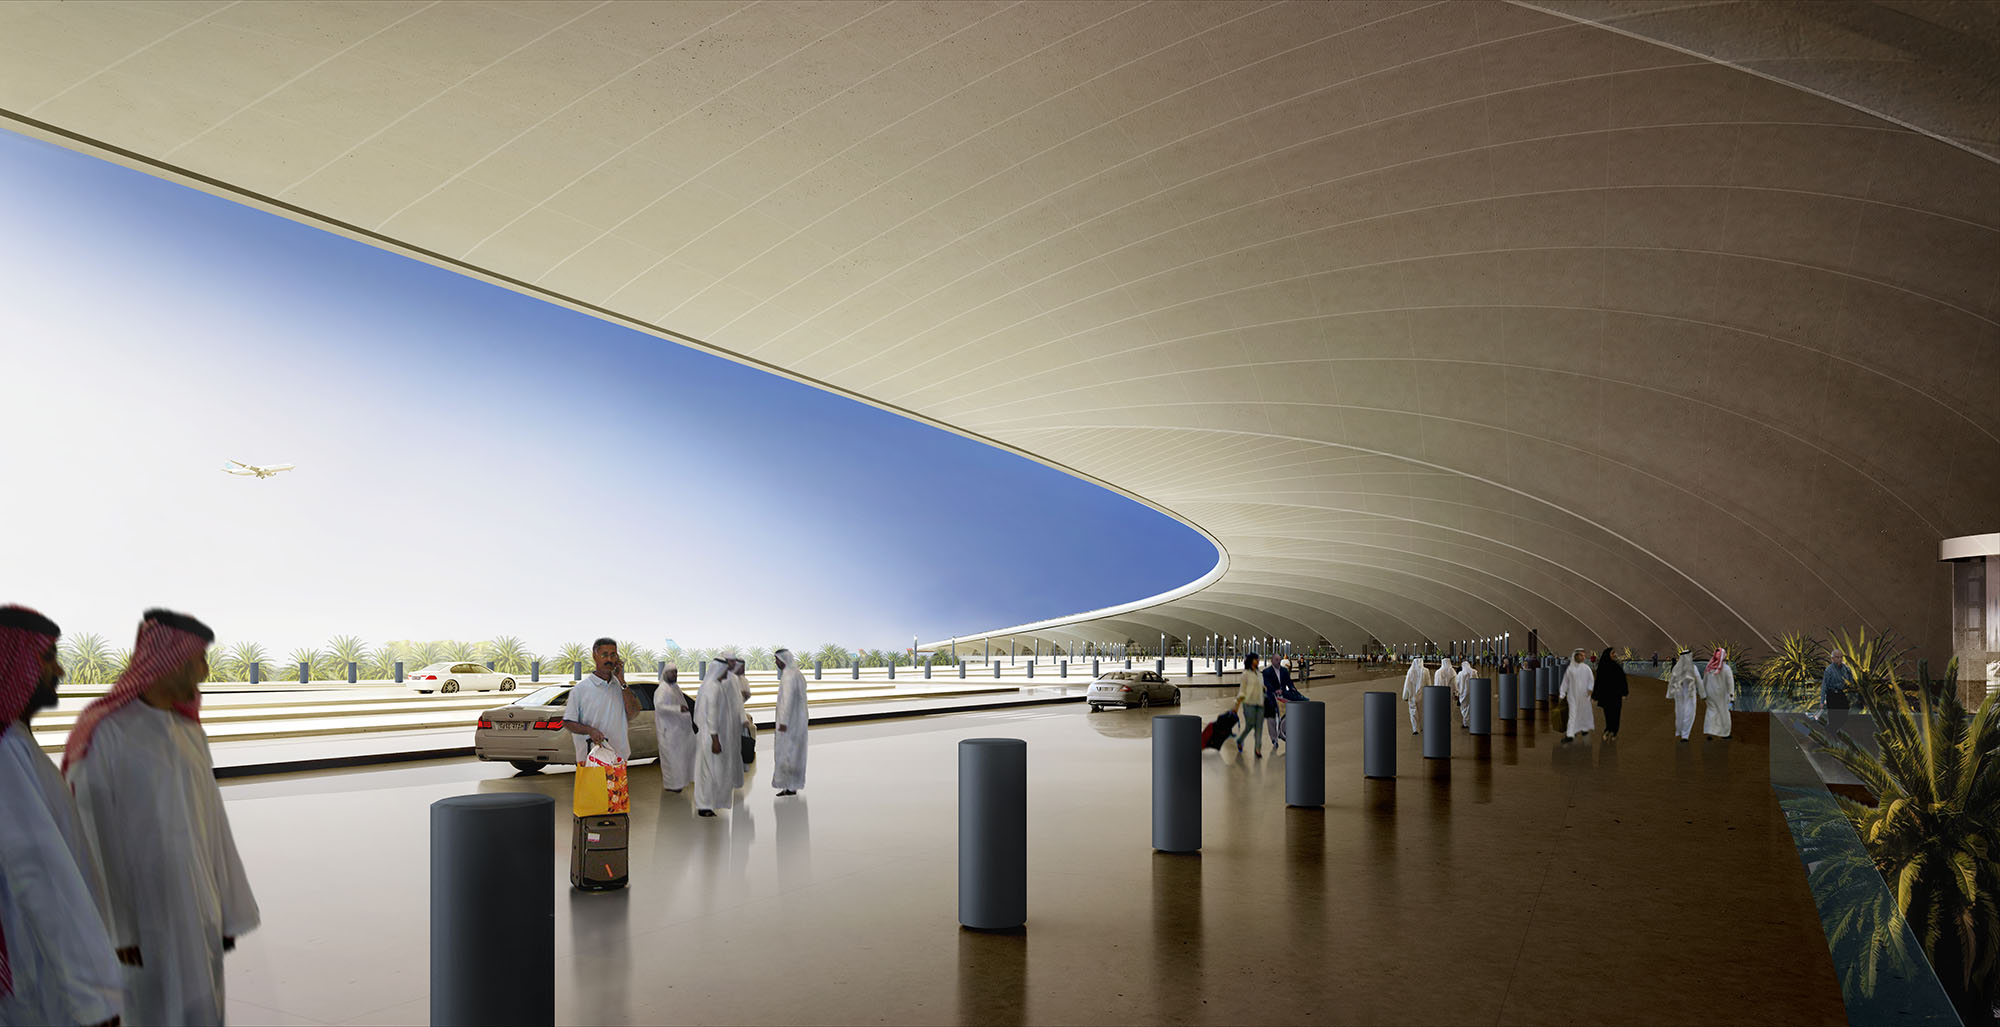 Kuwait International Airport Passenger Terminal